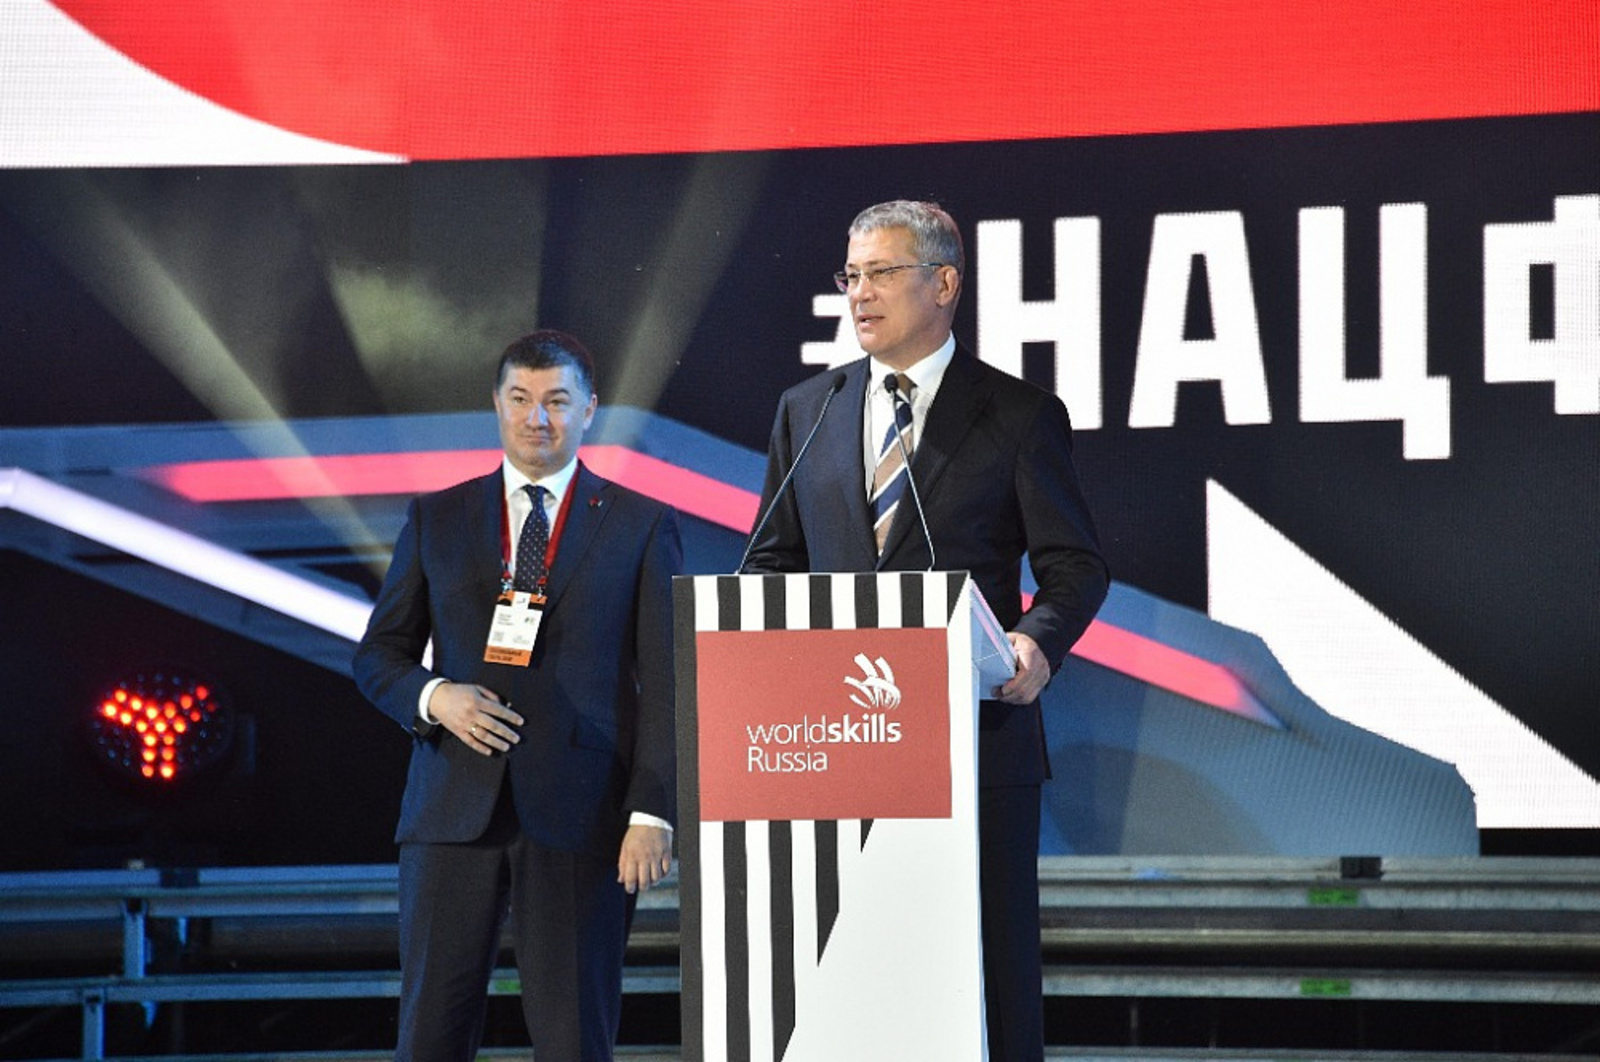 Глава Башкирии назвал нацфинал WorldSkills праздником труда и профессий